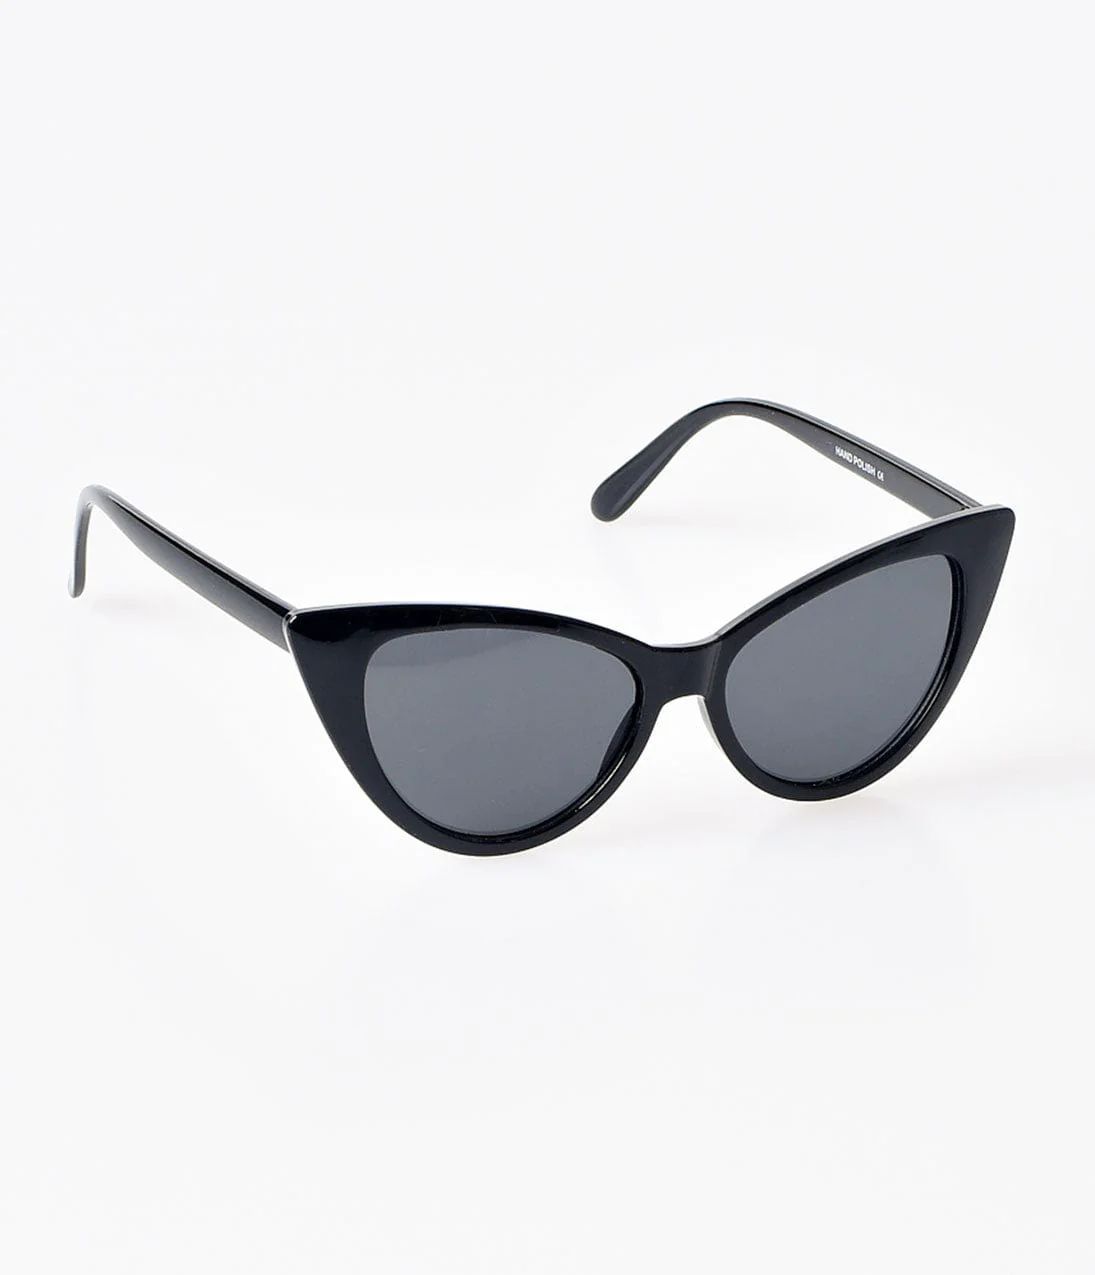 Black Retro Pointed Cat Eye Sunglasses | UniqueVintage